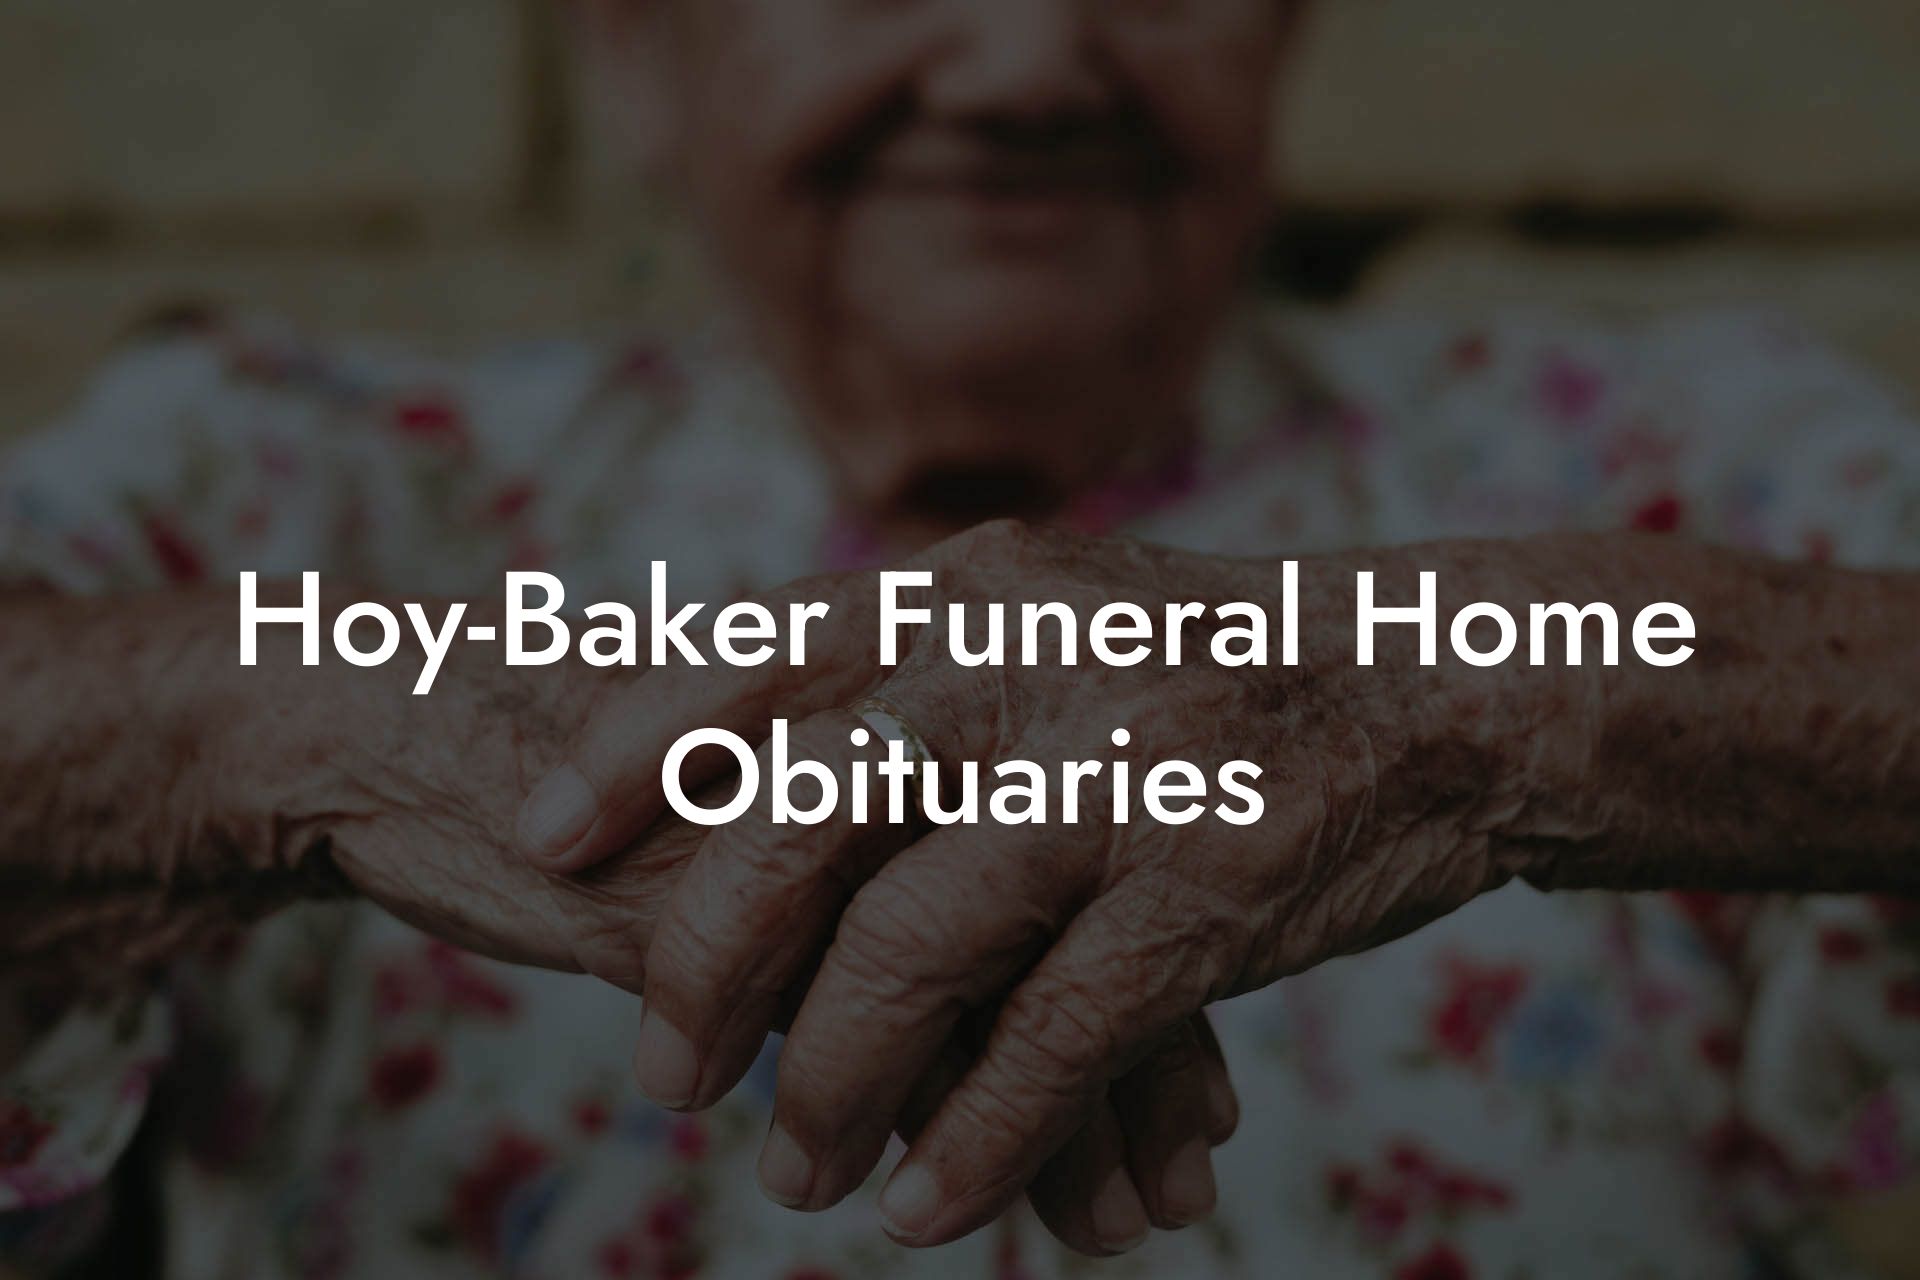 Hoy-Baker Funeral Home Obituaries